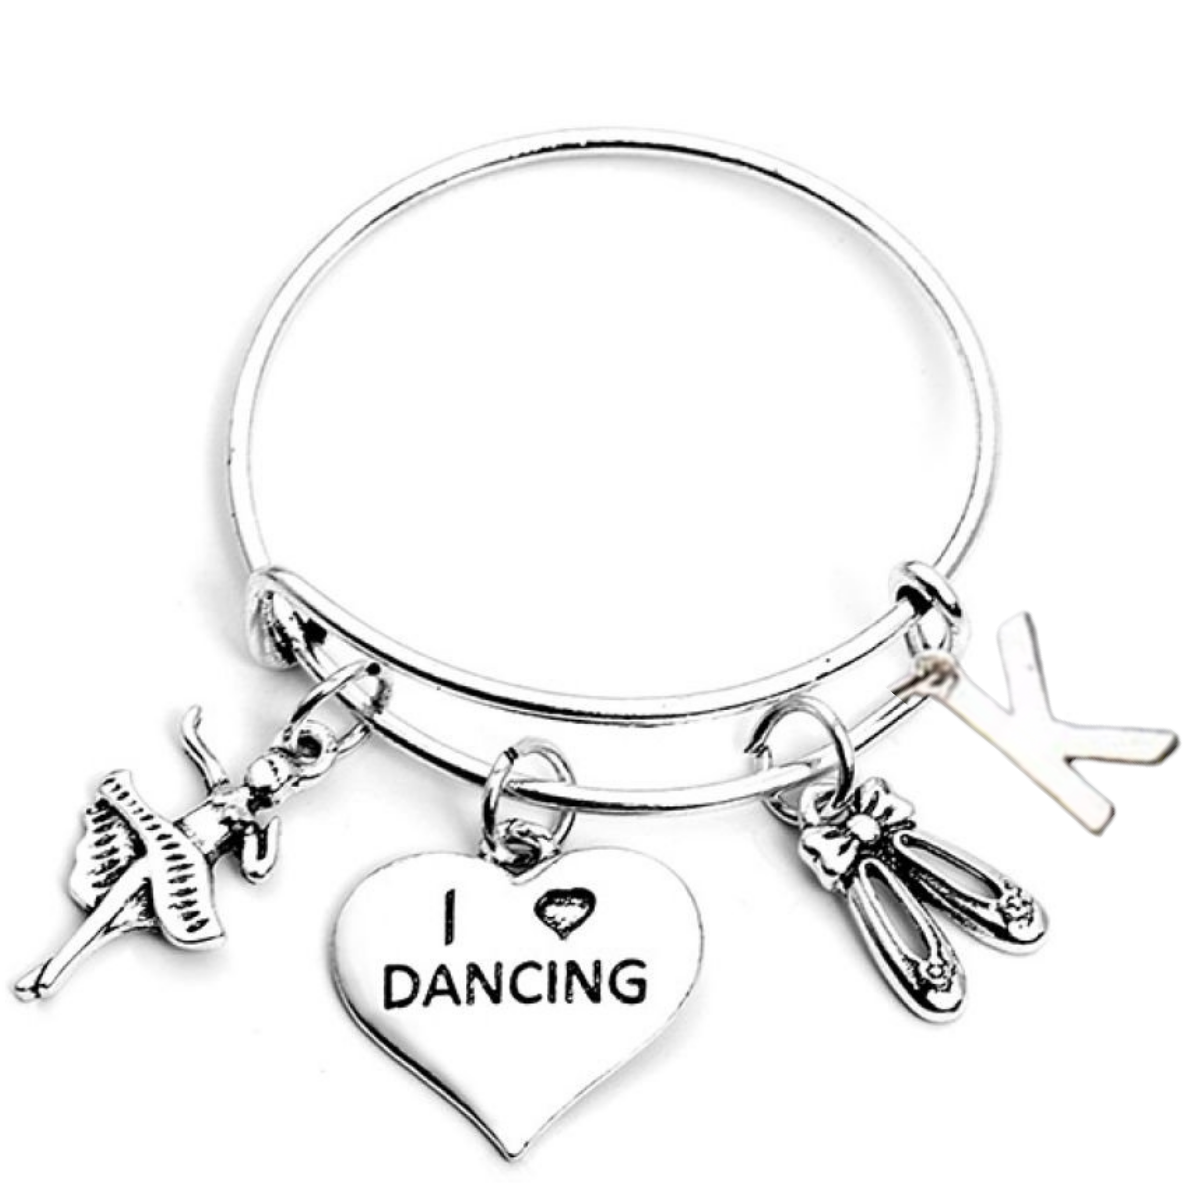 Personalized Dance Bangle Bracelet